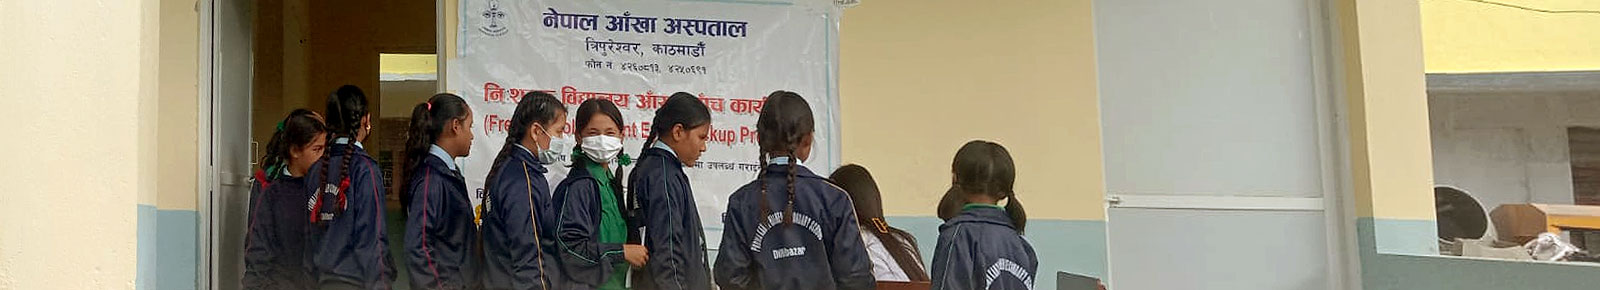 Kathmandu School Vision Screening Programm